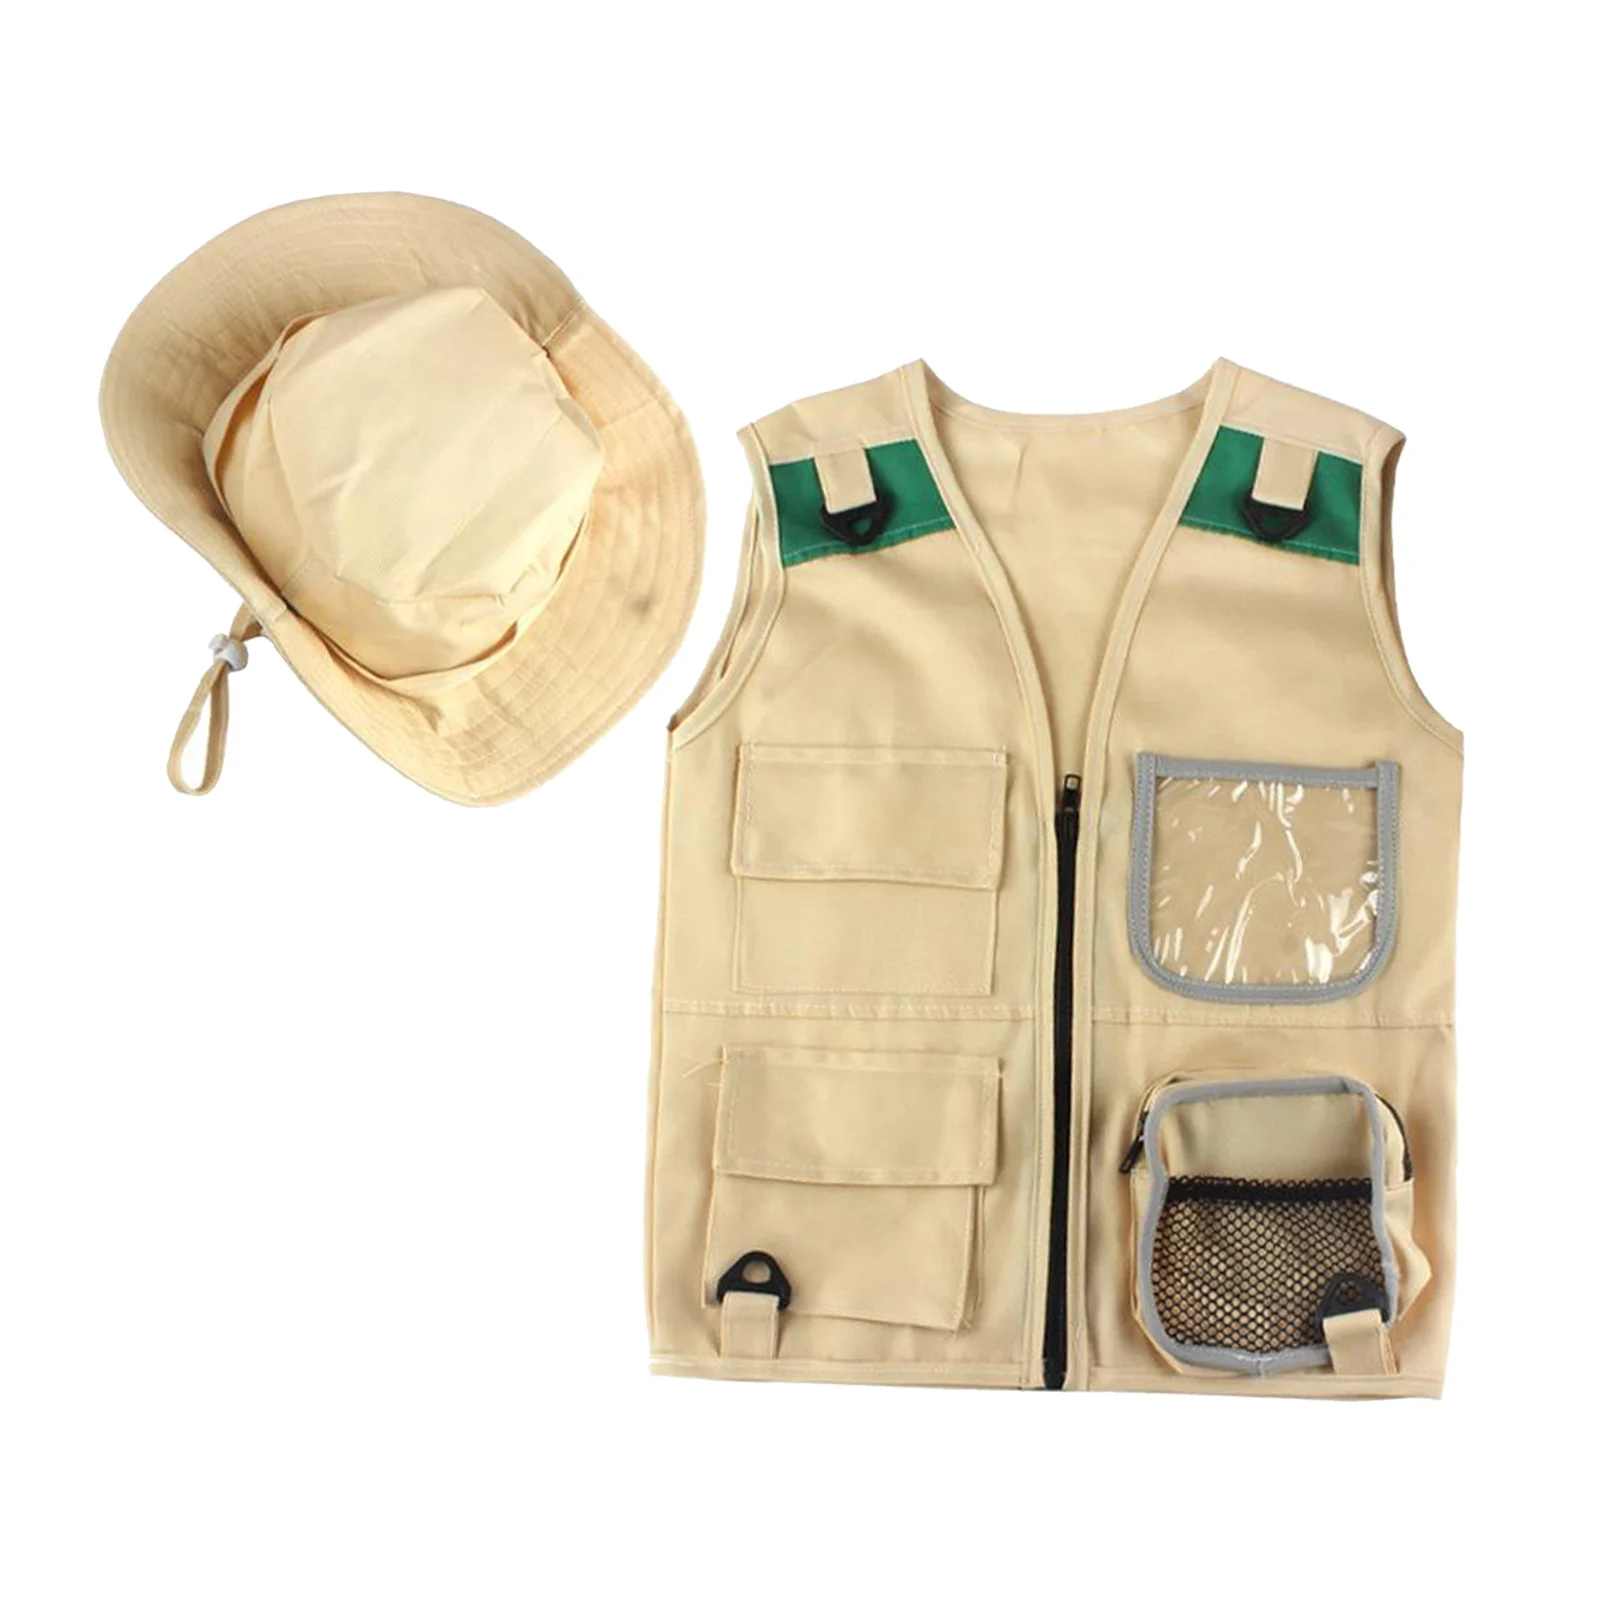 Outdoor Adventure Kit for Young Kids,Cargo Vest and Hat Set Backyard Explorer Safari Costume and Dress Up for Park Ranger